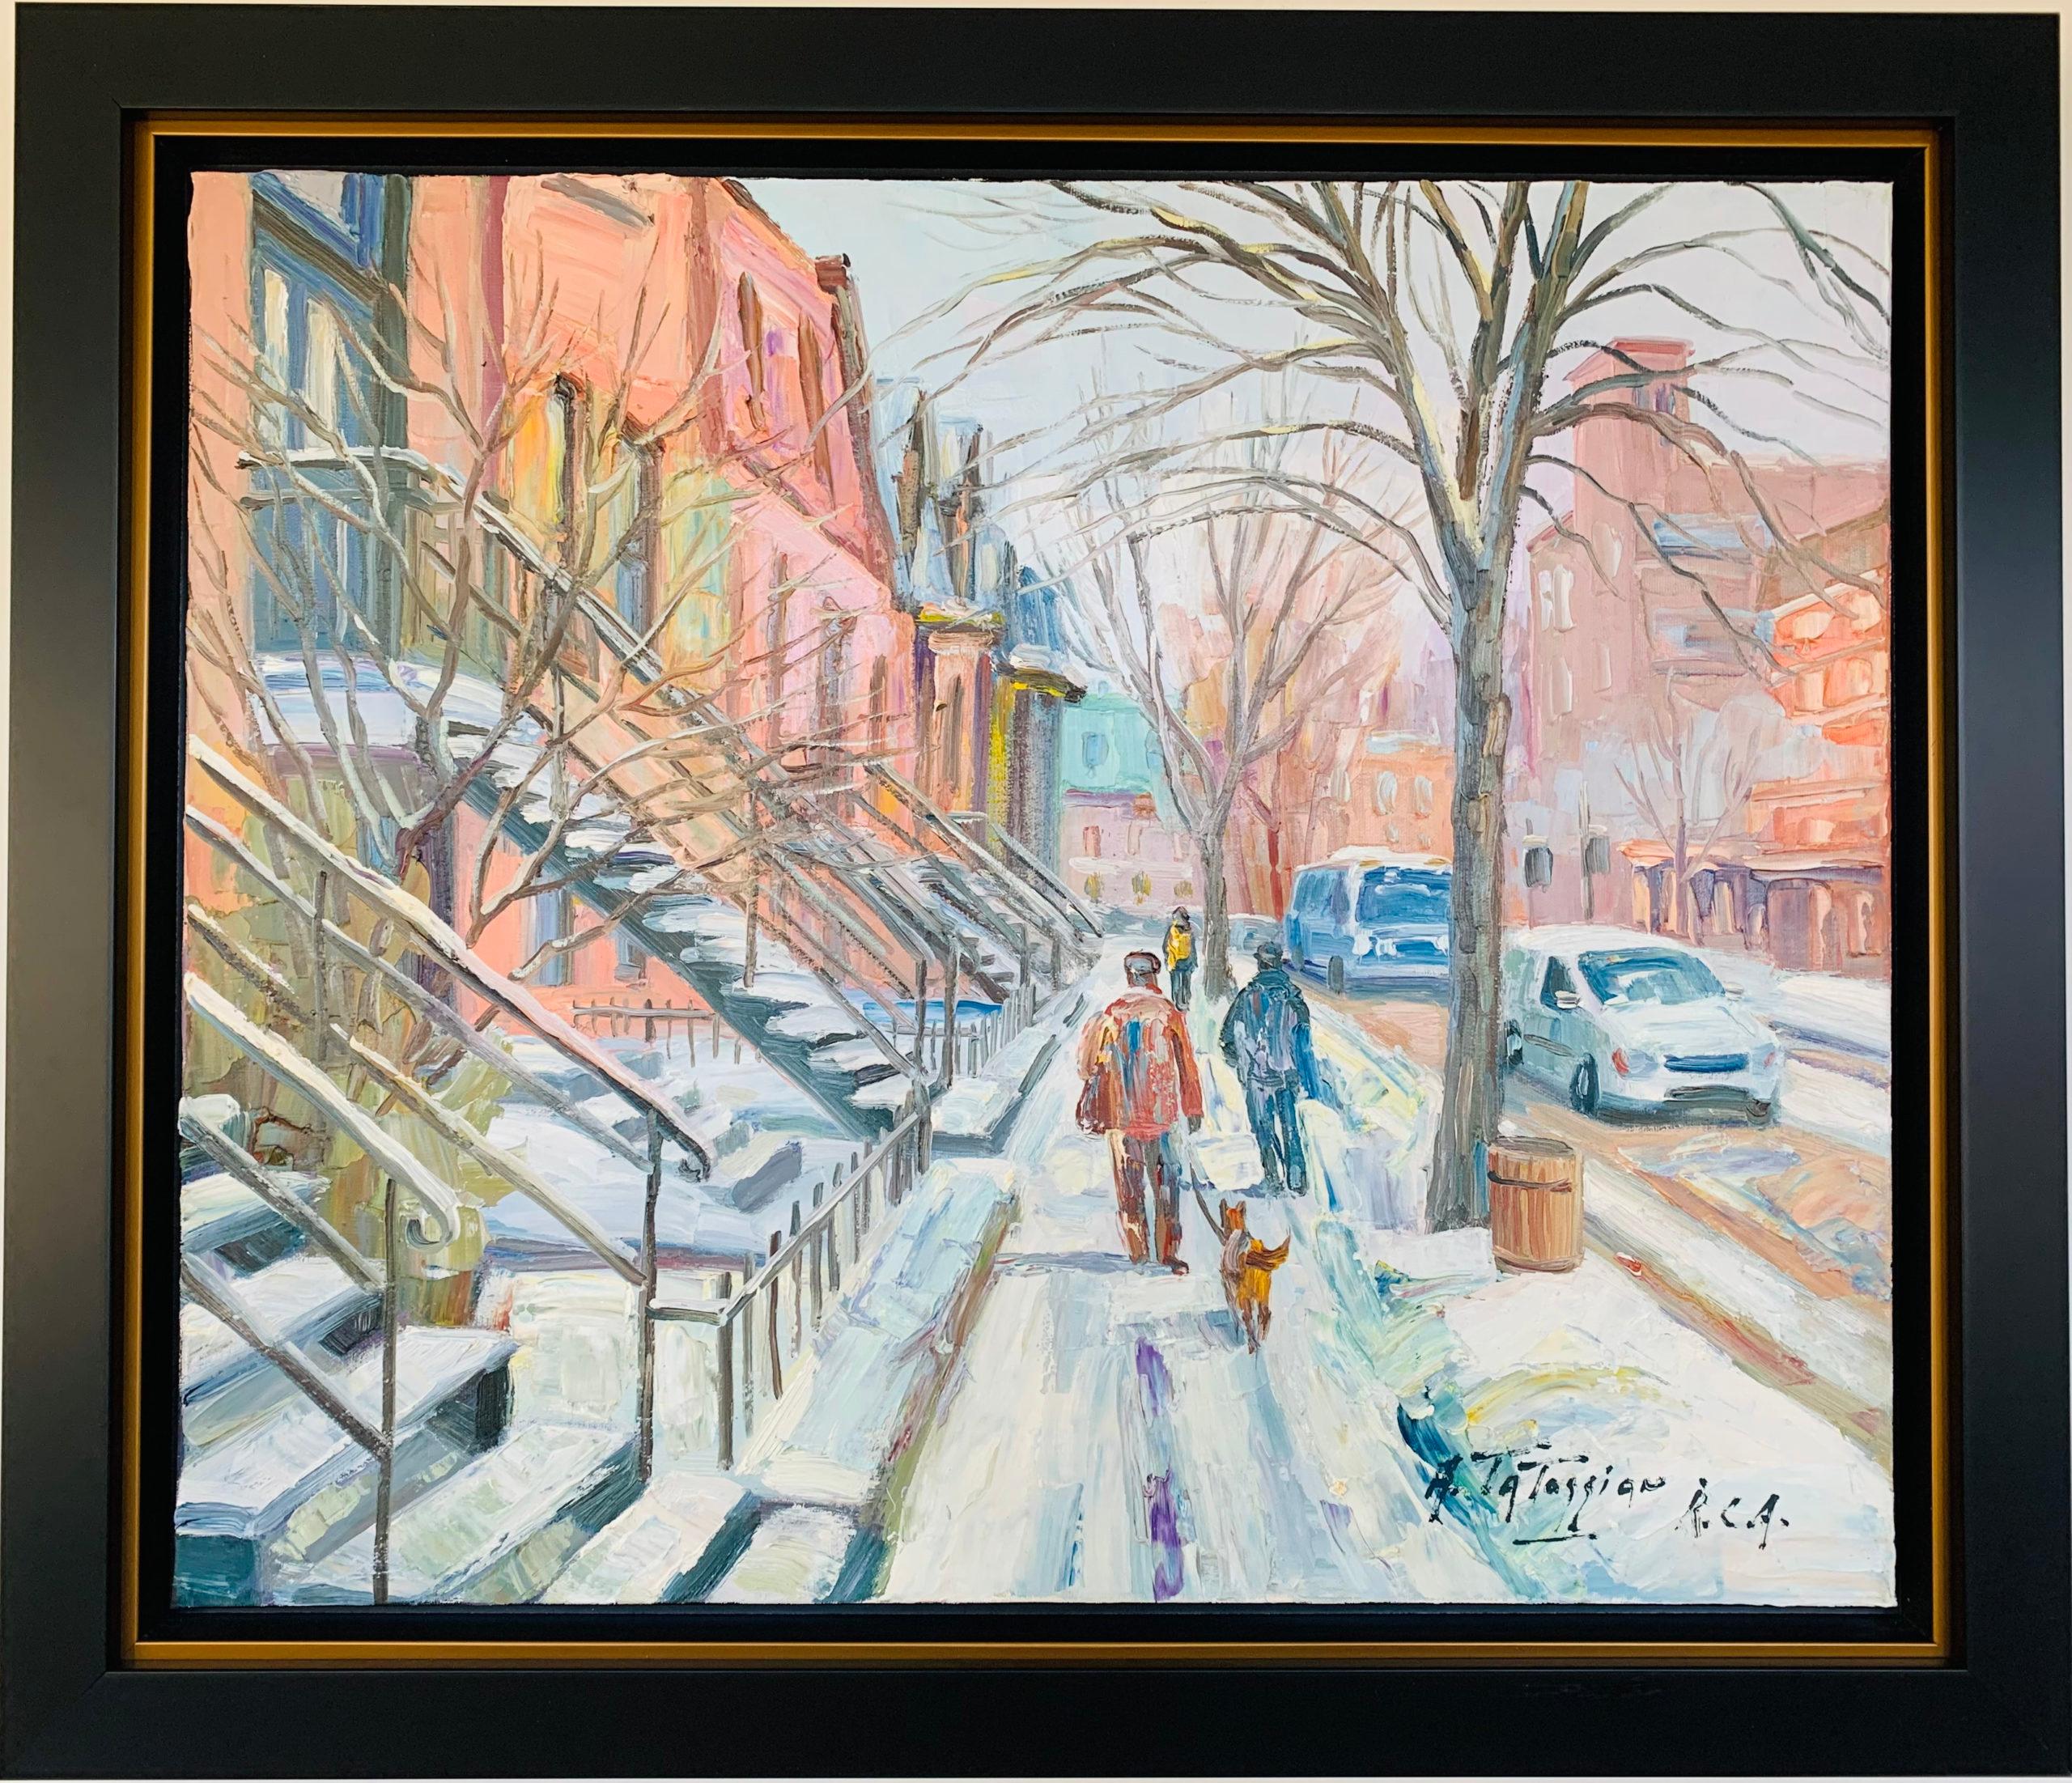 Montreal winter - Painting by Armand Tatossian